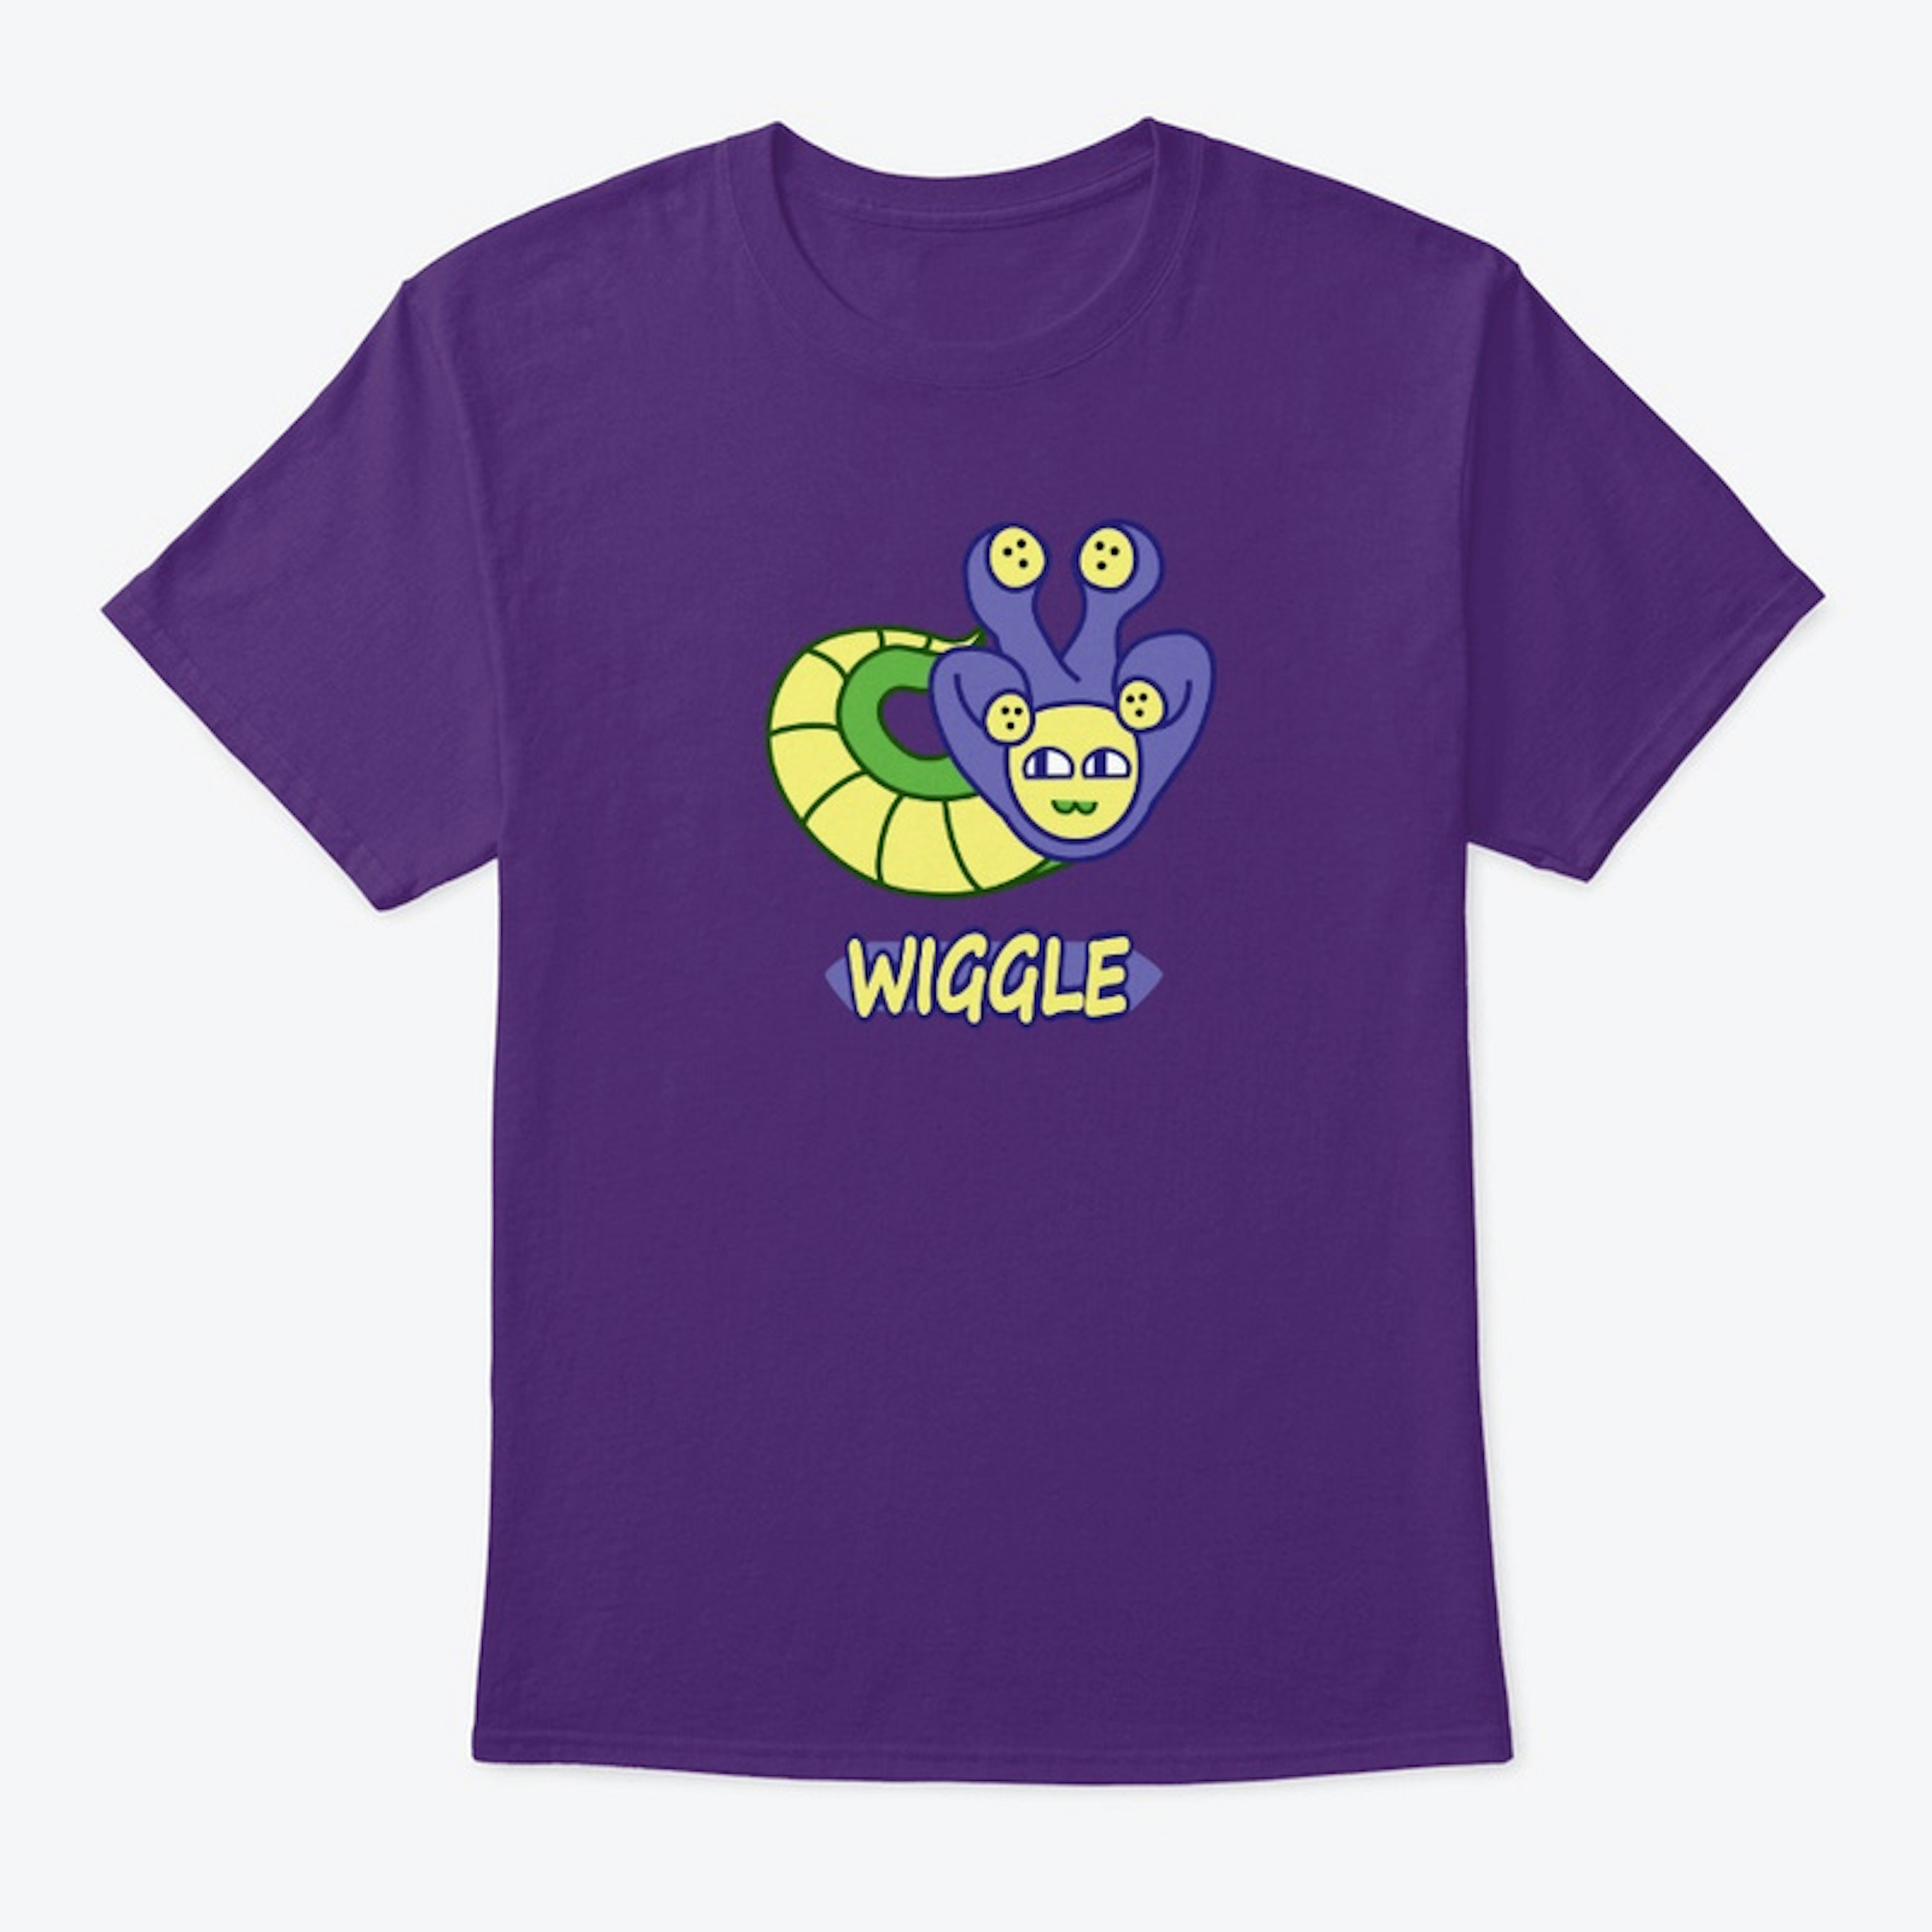 Wiggle shirt